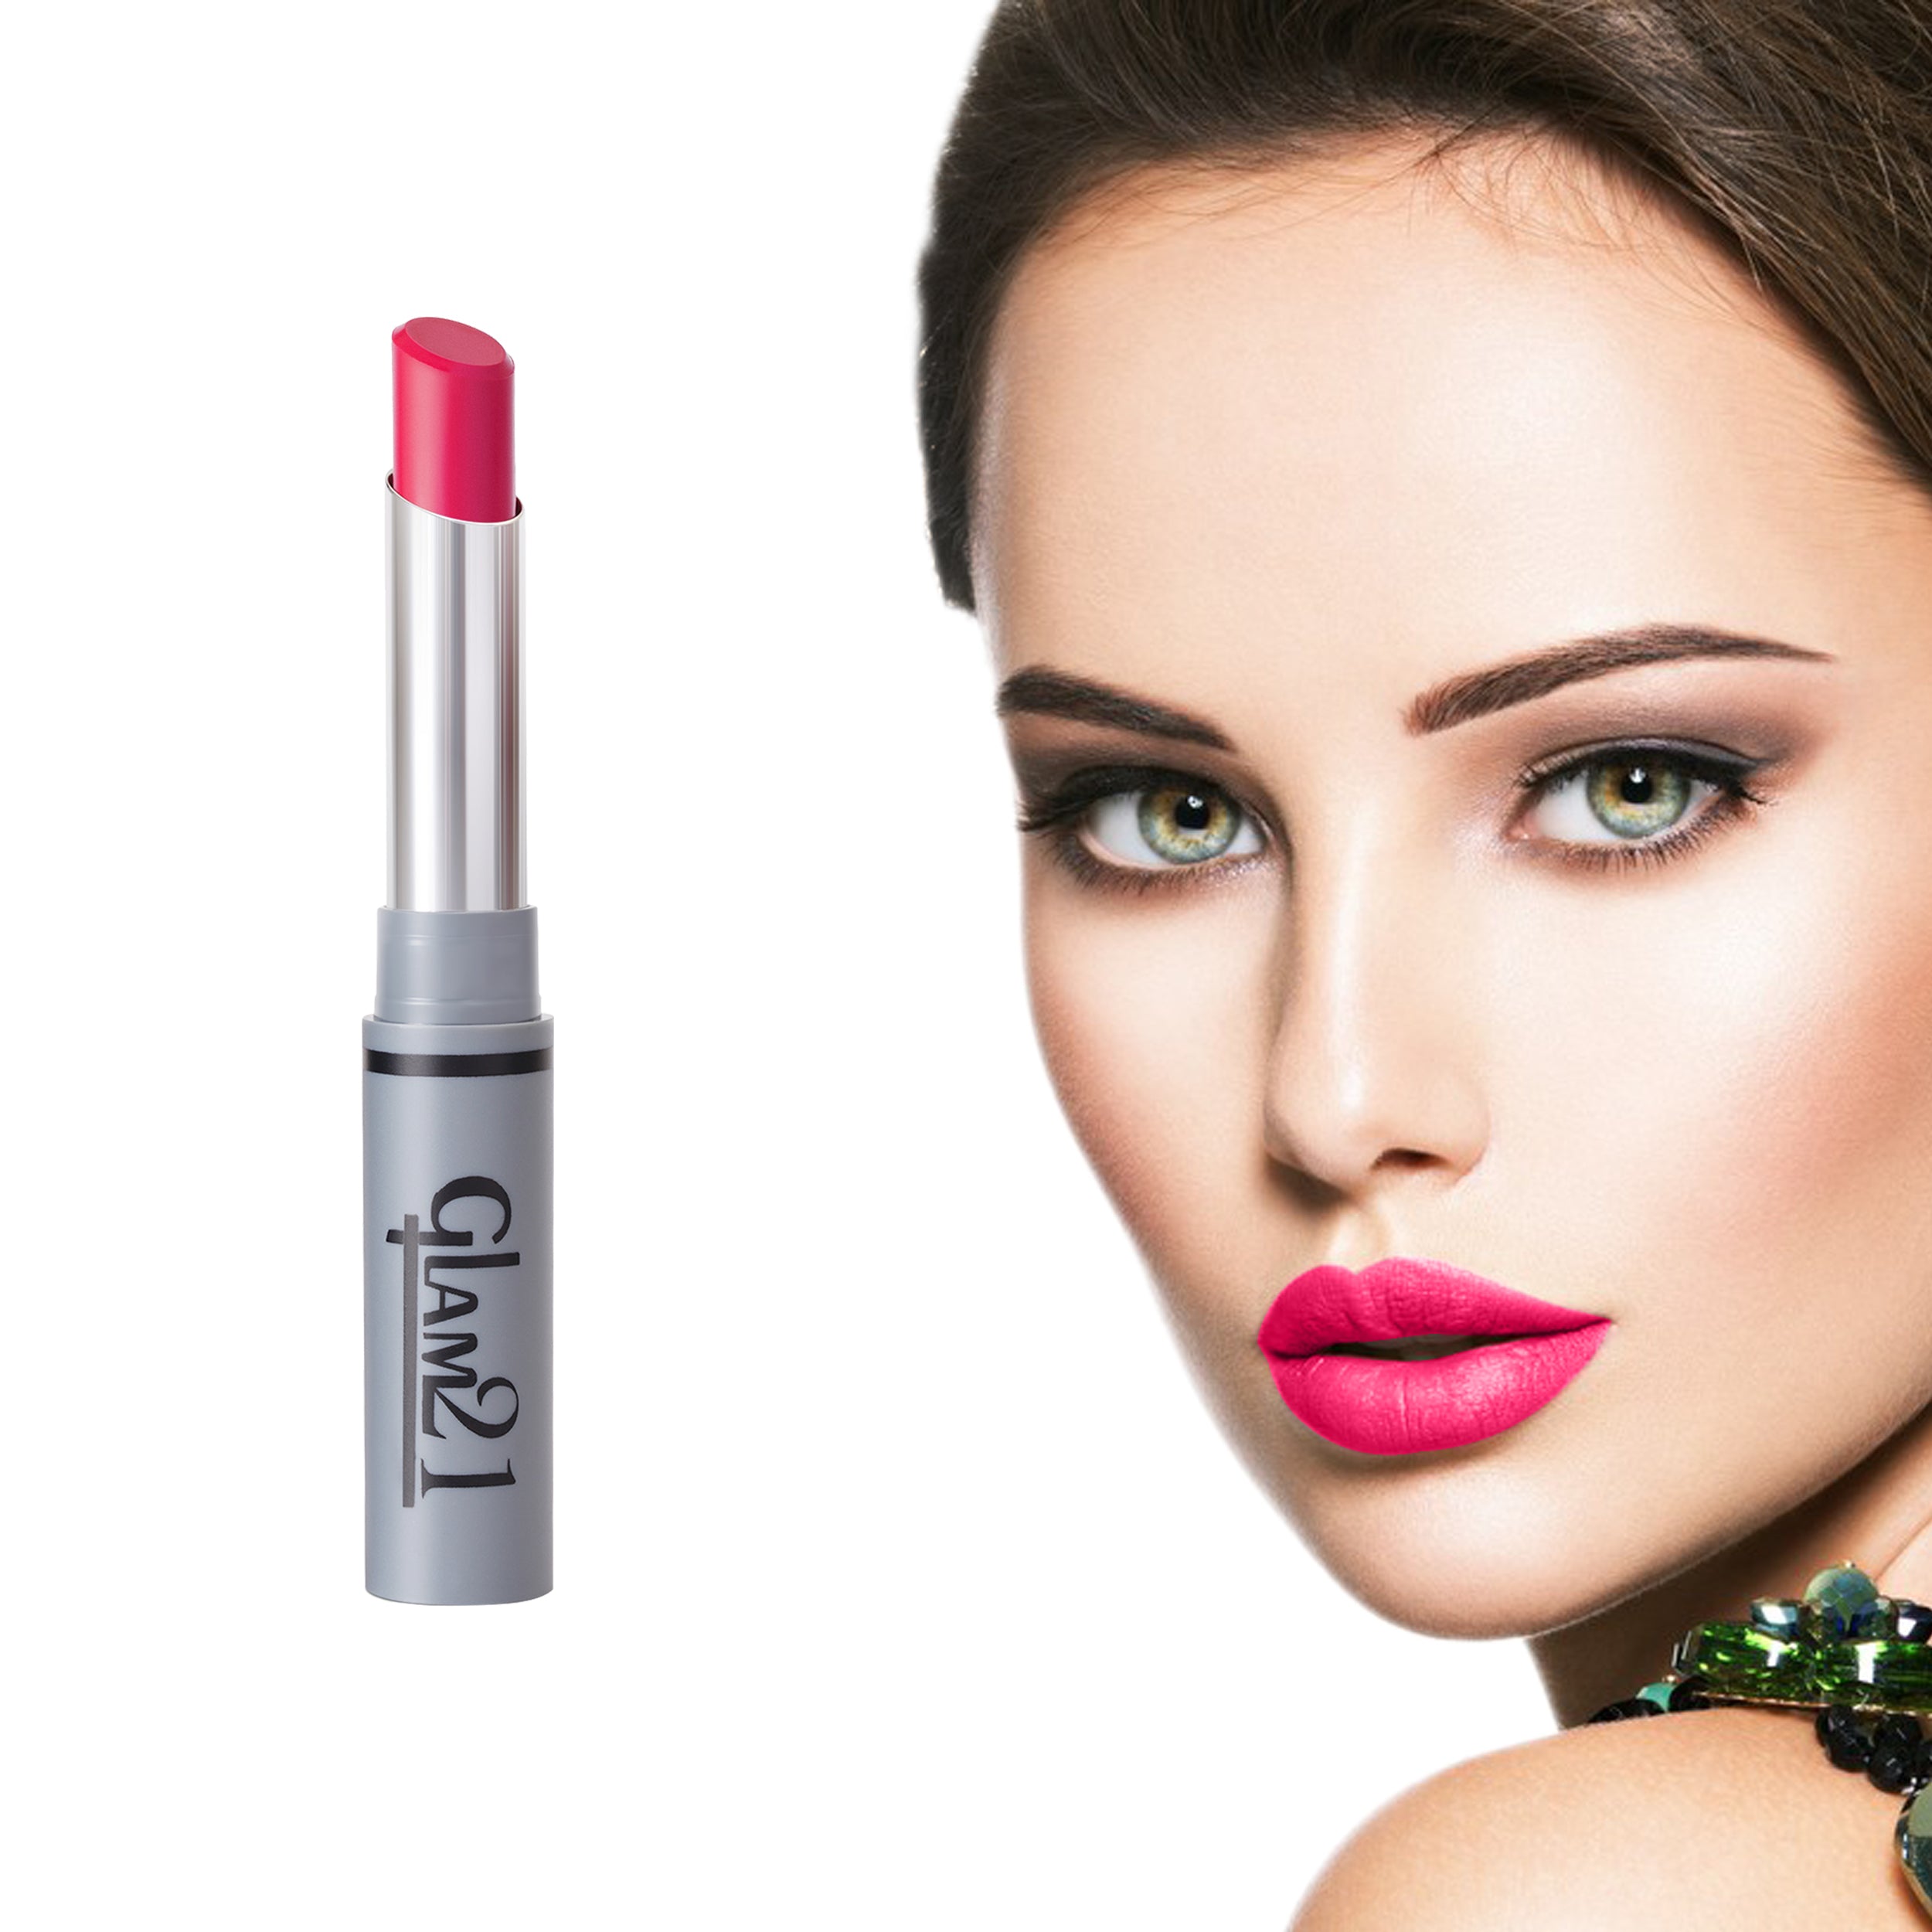 Glam21 Non Transfer Lipstick-Longlasting & Lightweight Creamy Matte Formula, 2.8g - Magenta Love-10